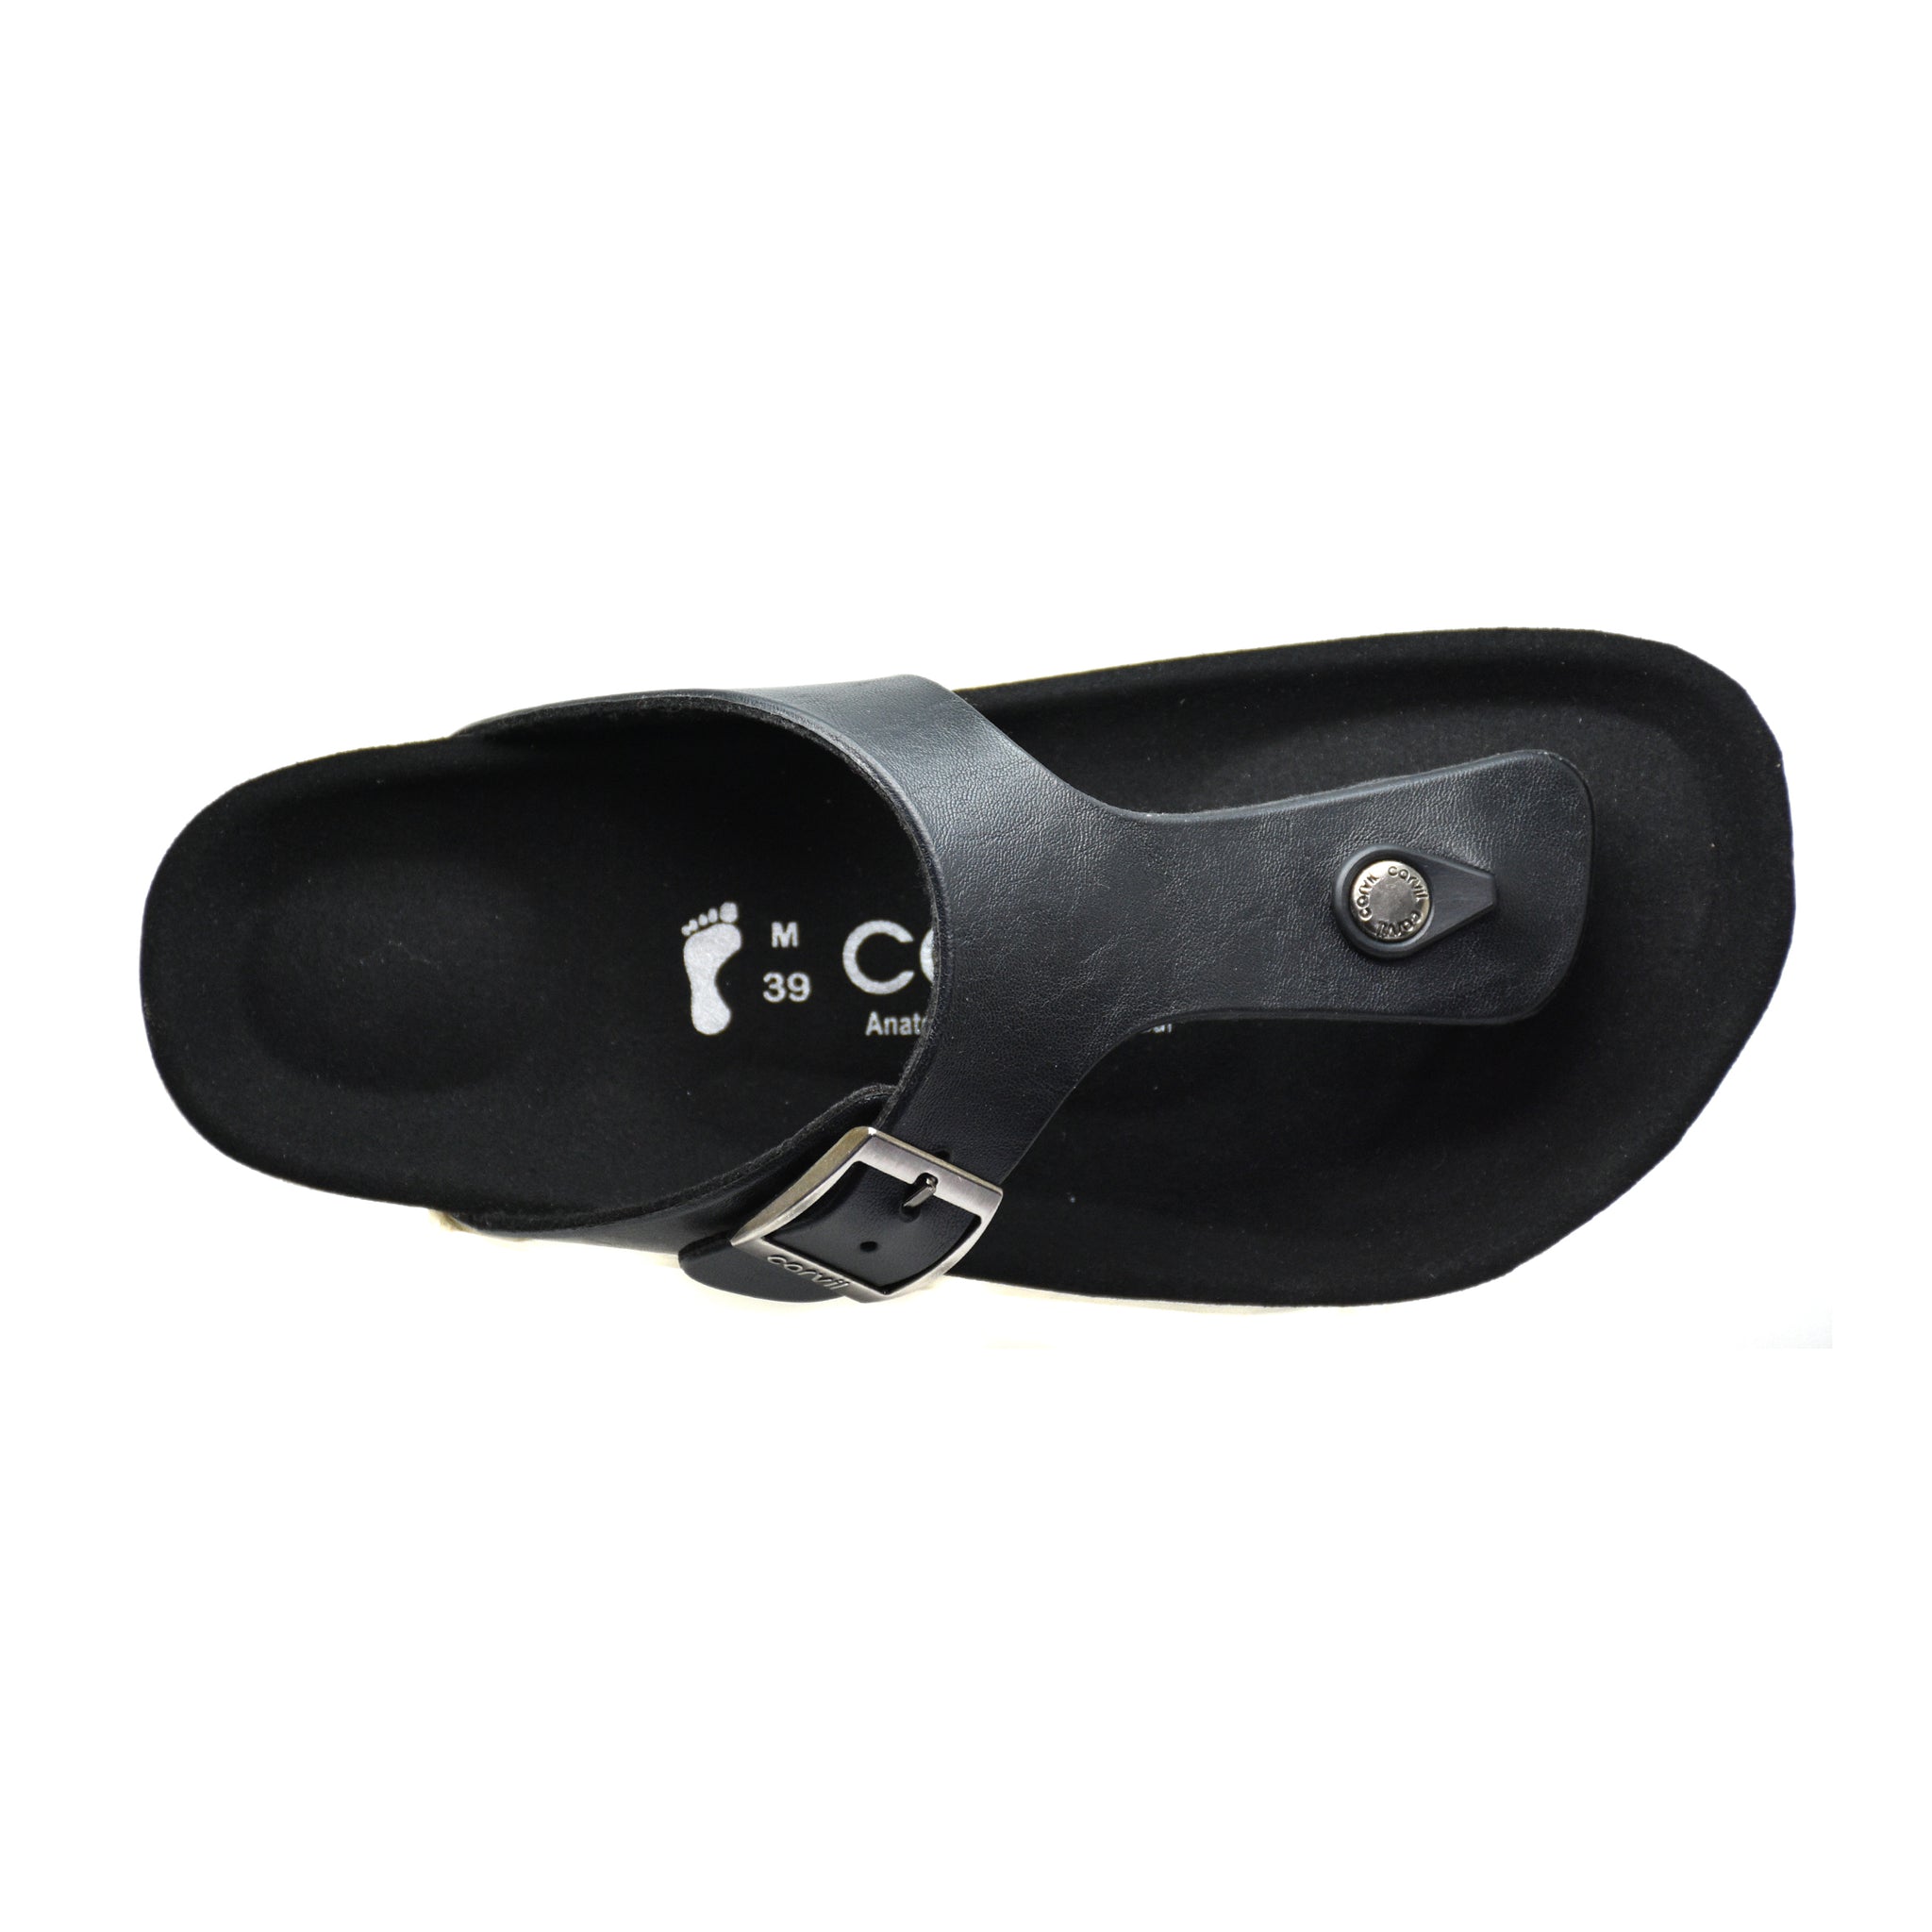 Carvil Sandal Pria ROMEO-01 M BLACK/BLACK